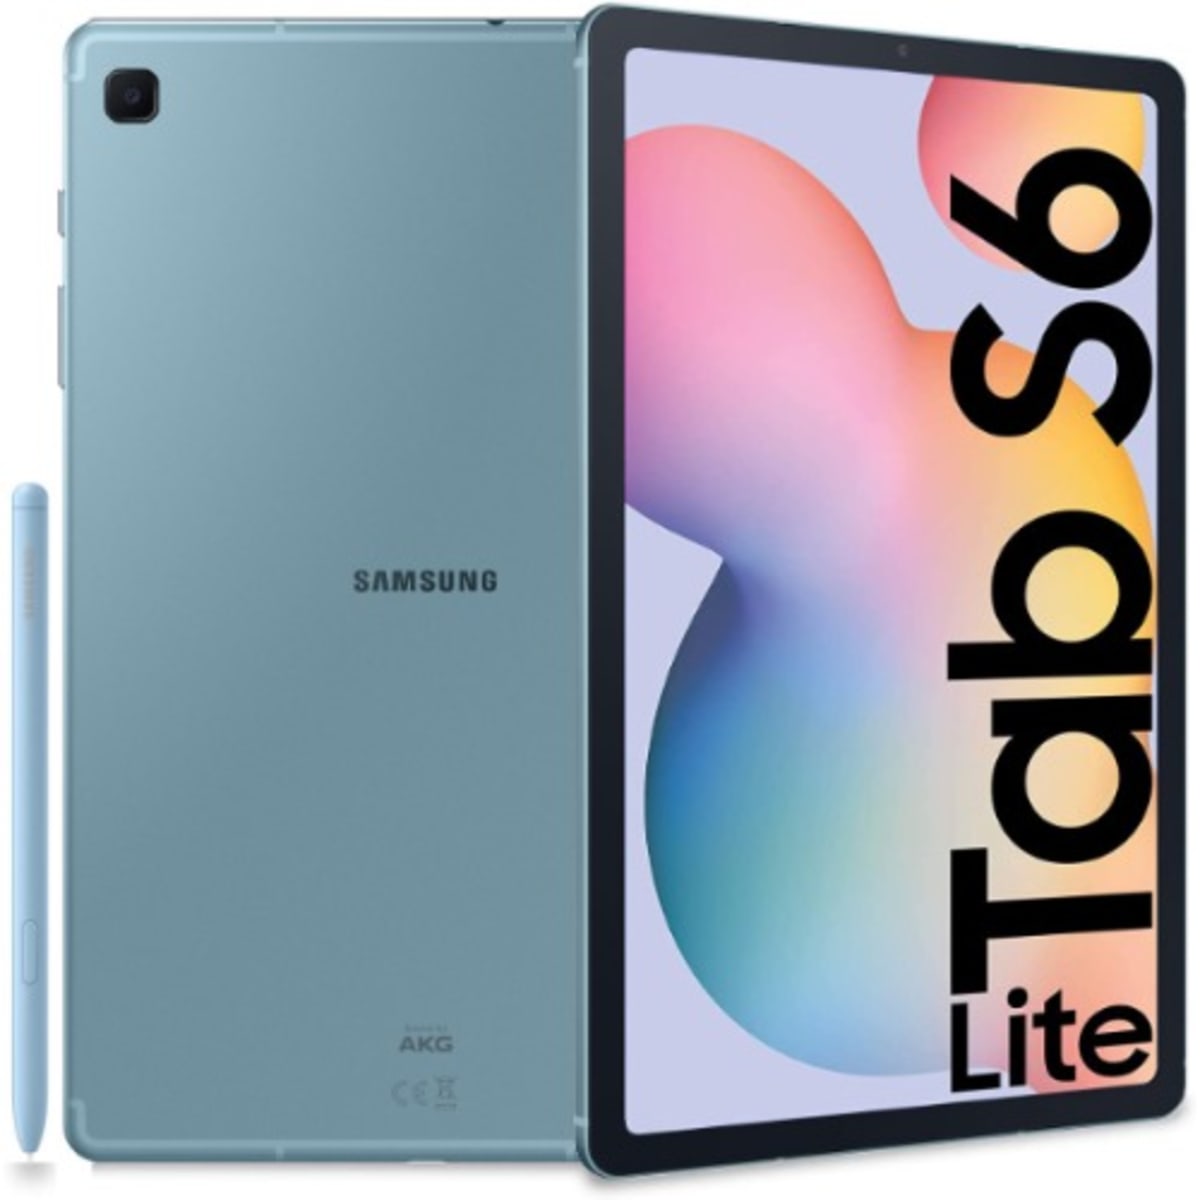 SIMフリーセルラーモデル【LTE】Galaxy Tab S6 Lite 64GB 本体・Sペンのみ